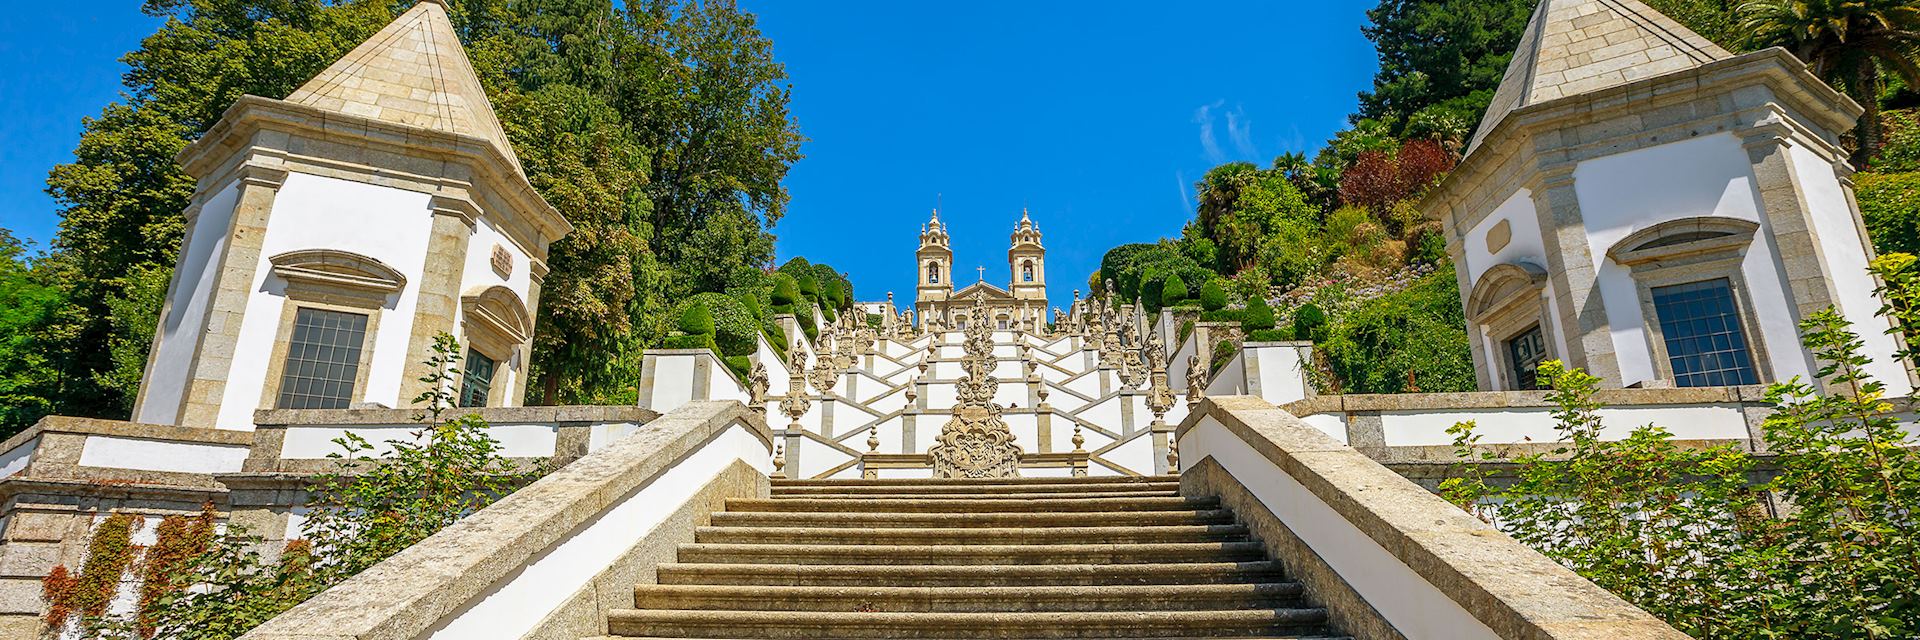 Staircase of Bom Jesus do Monte, Braga